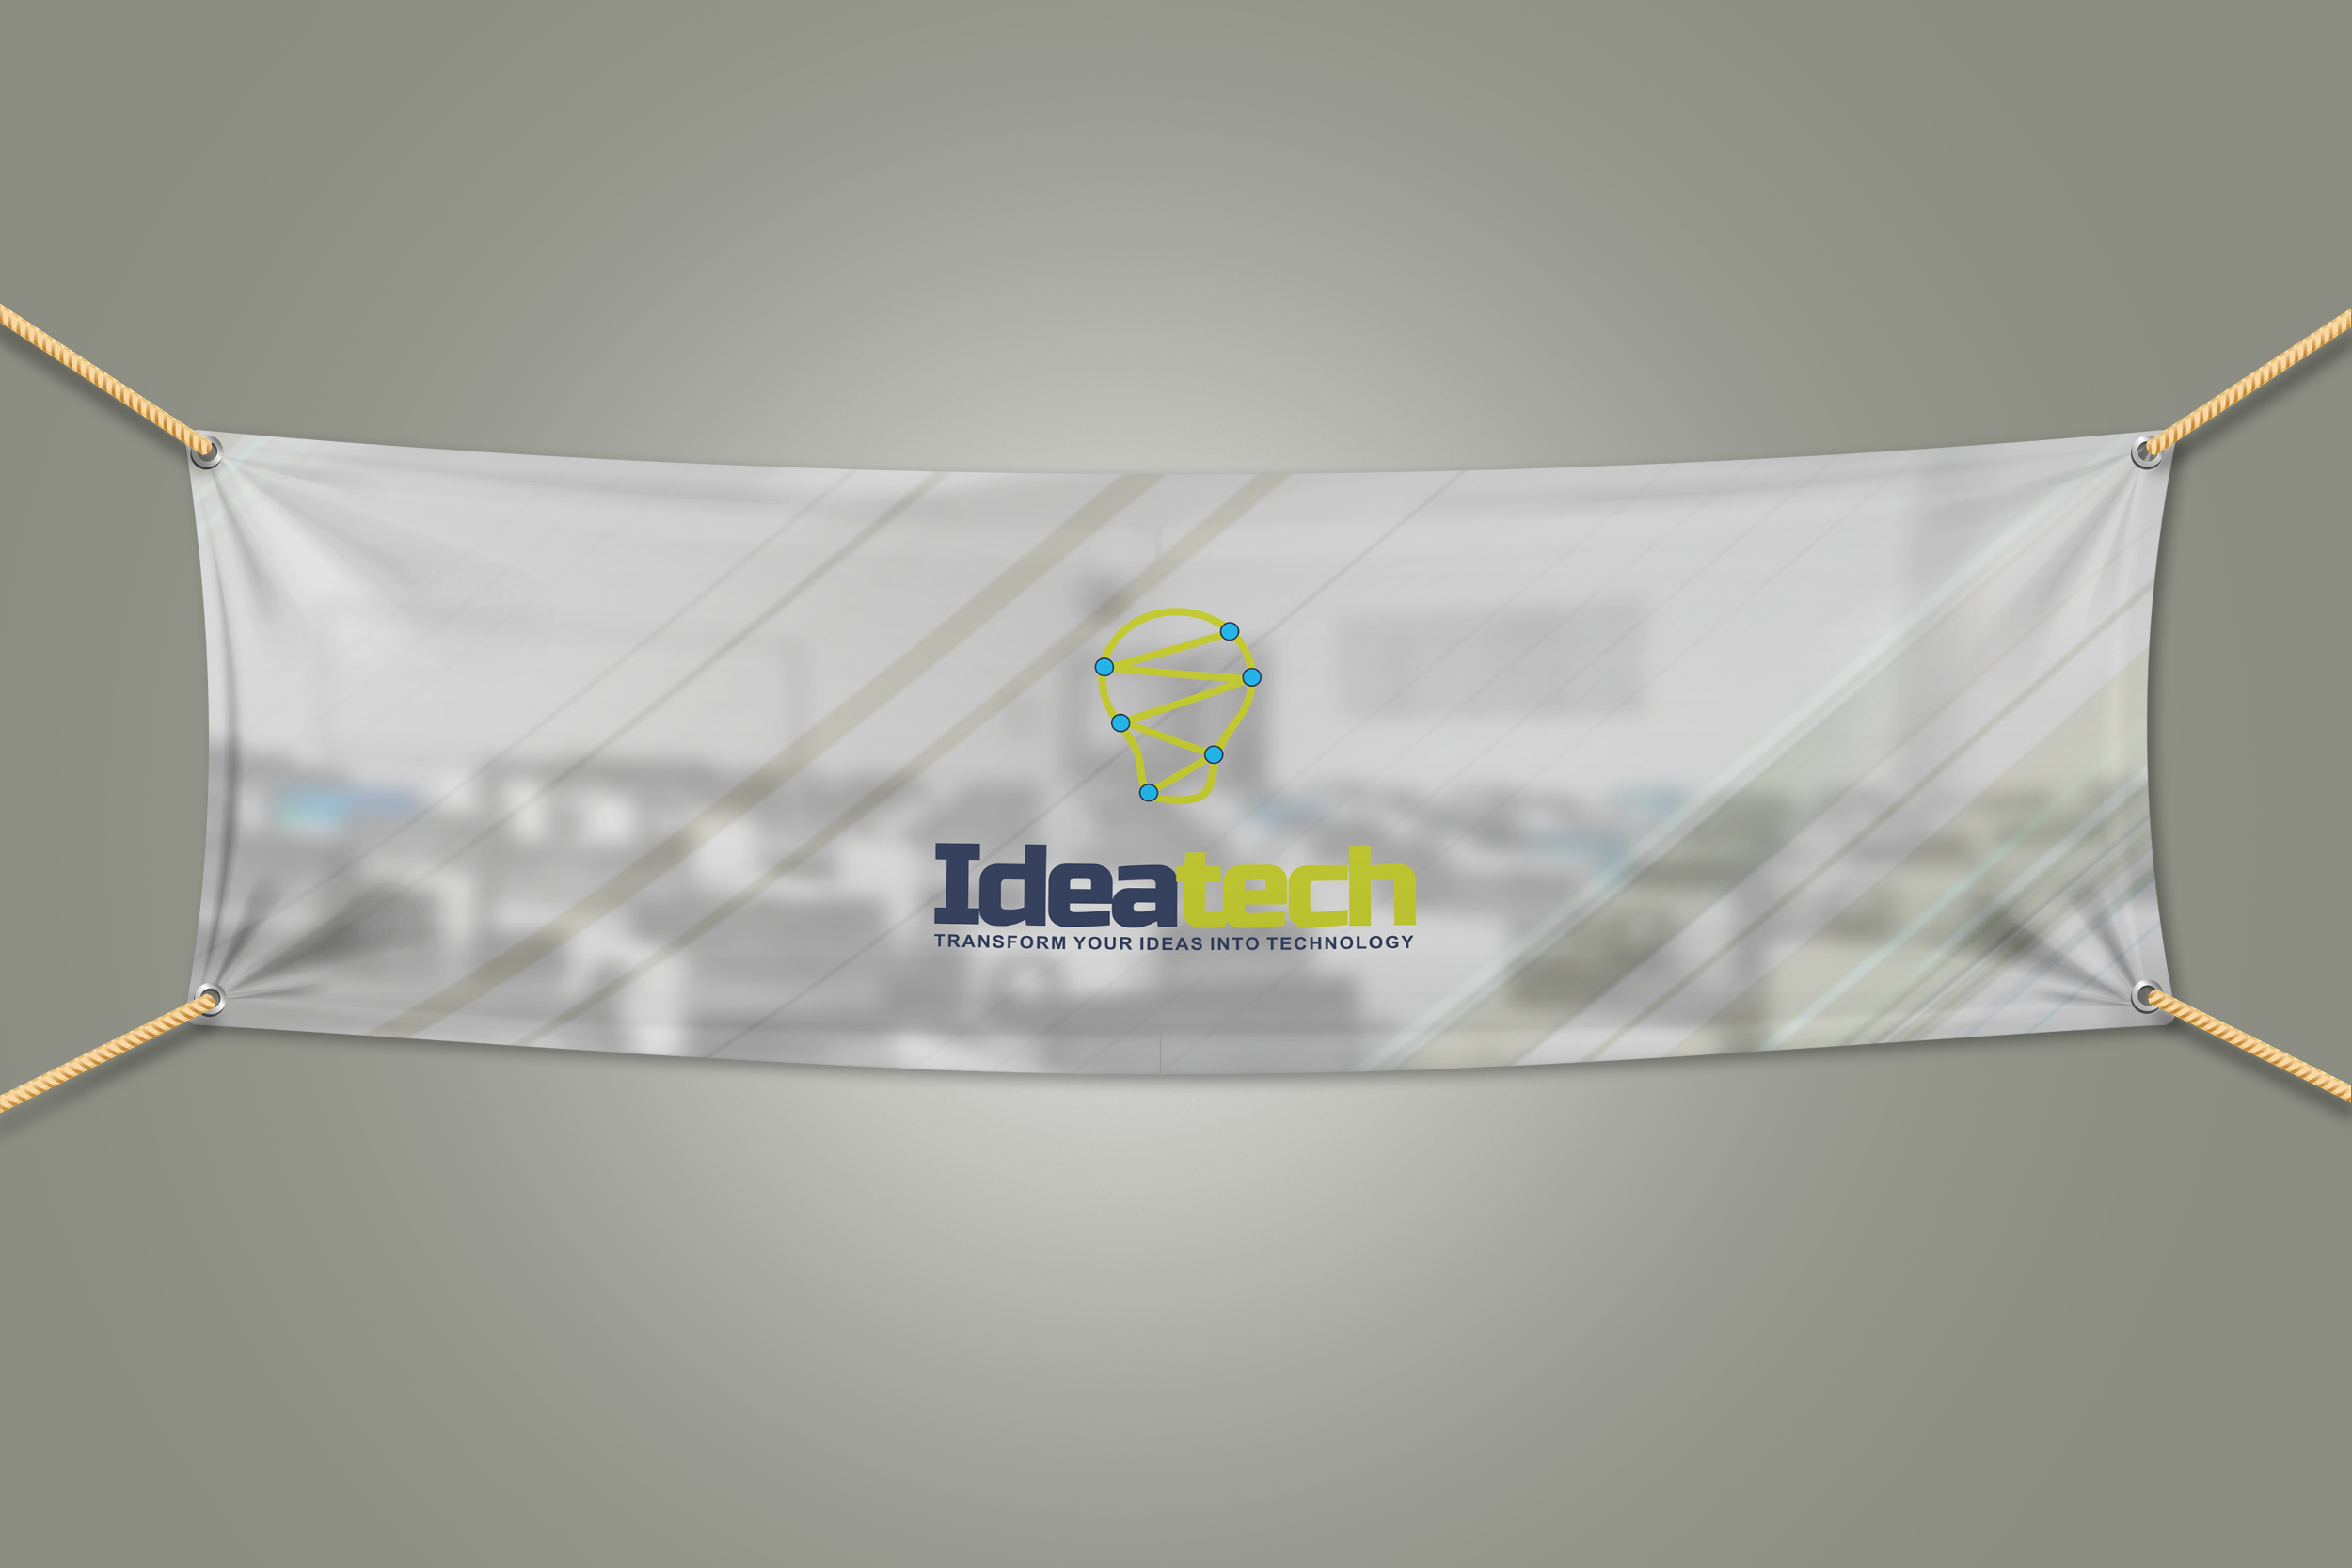 Ideatech